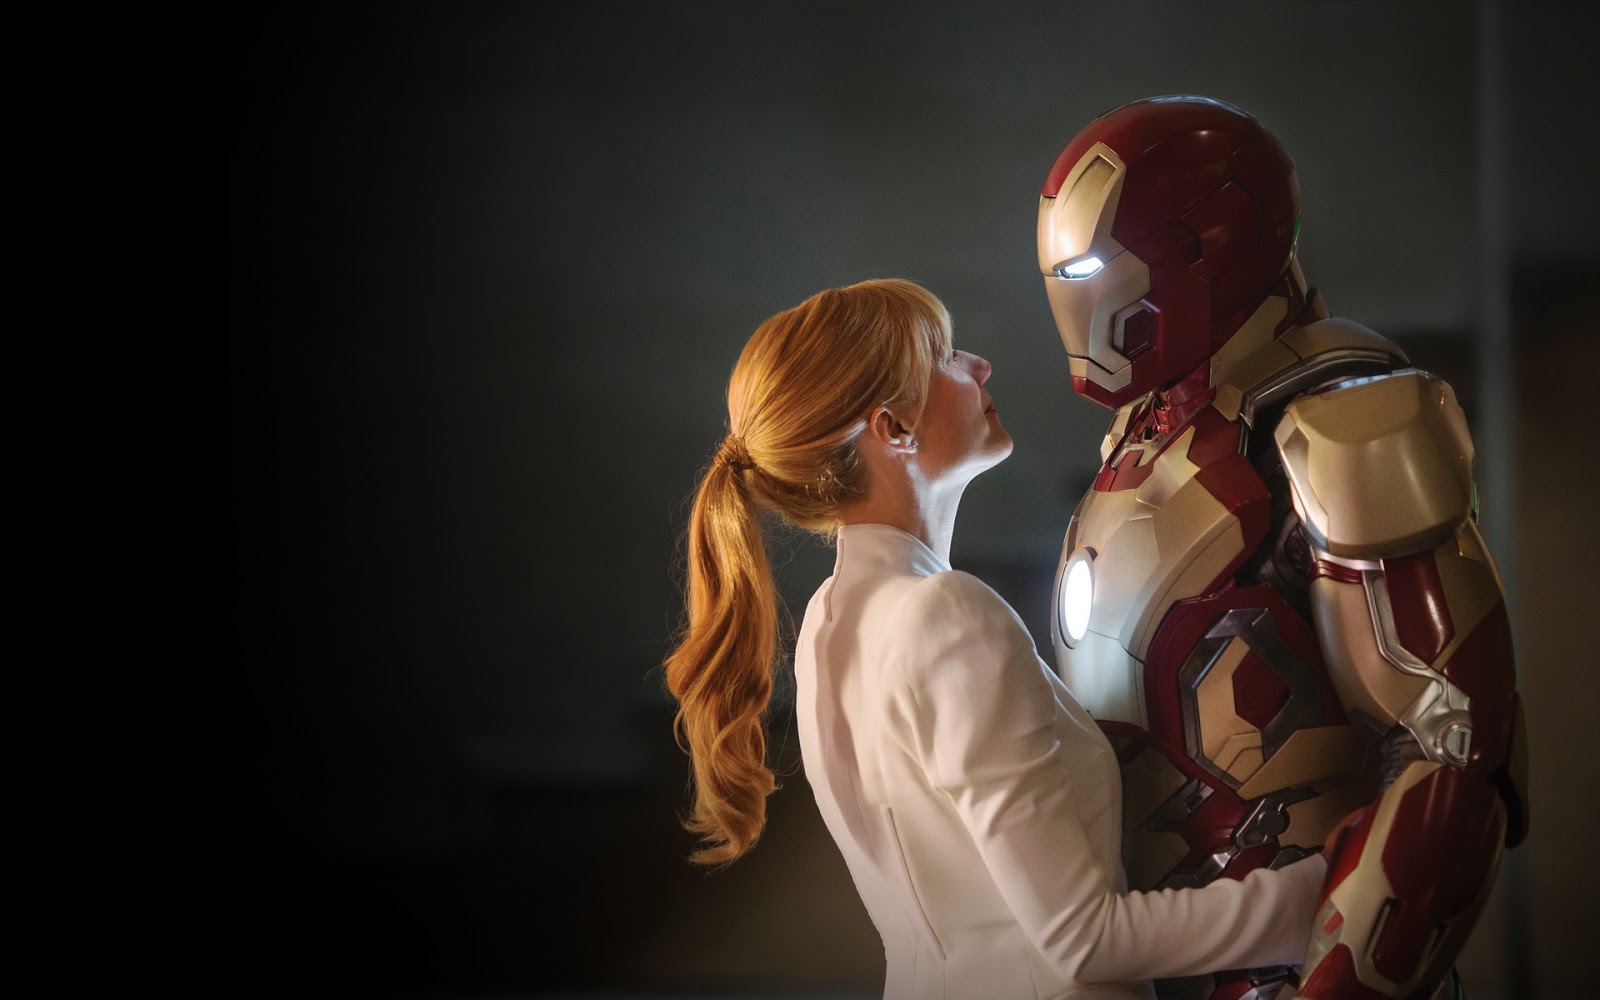 Iron Man Movie Wallpaper